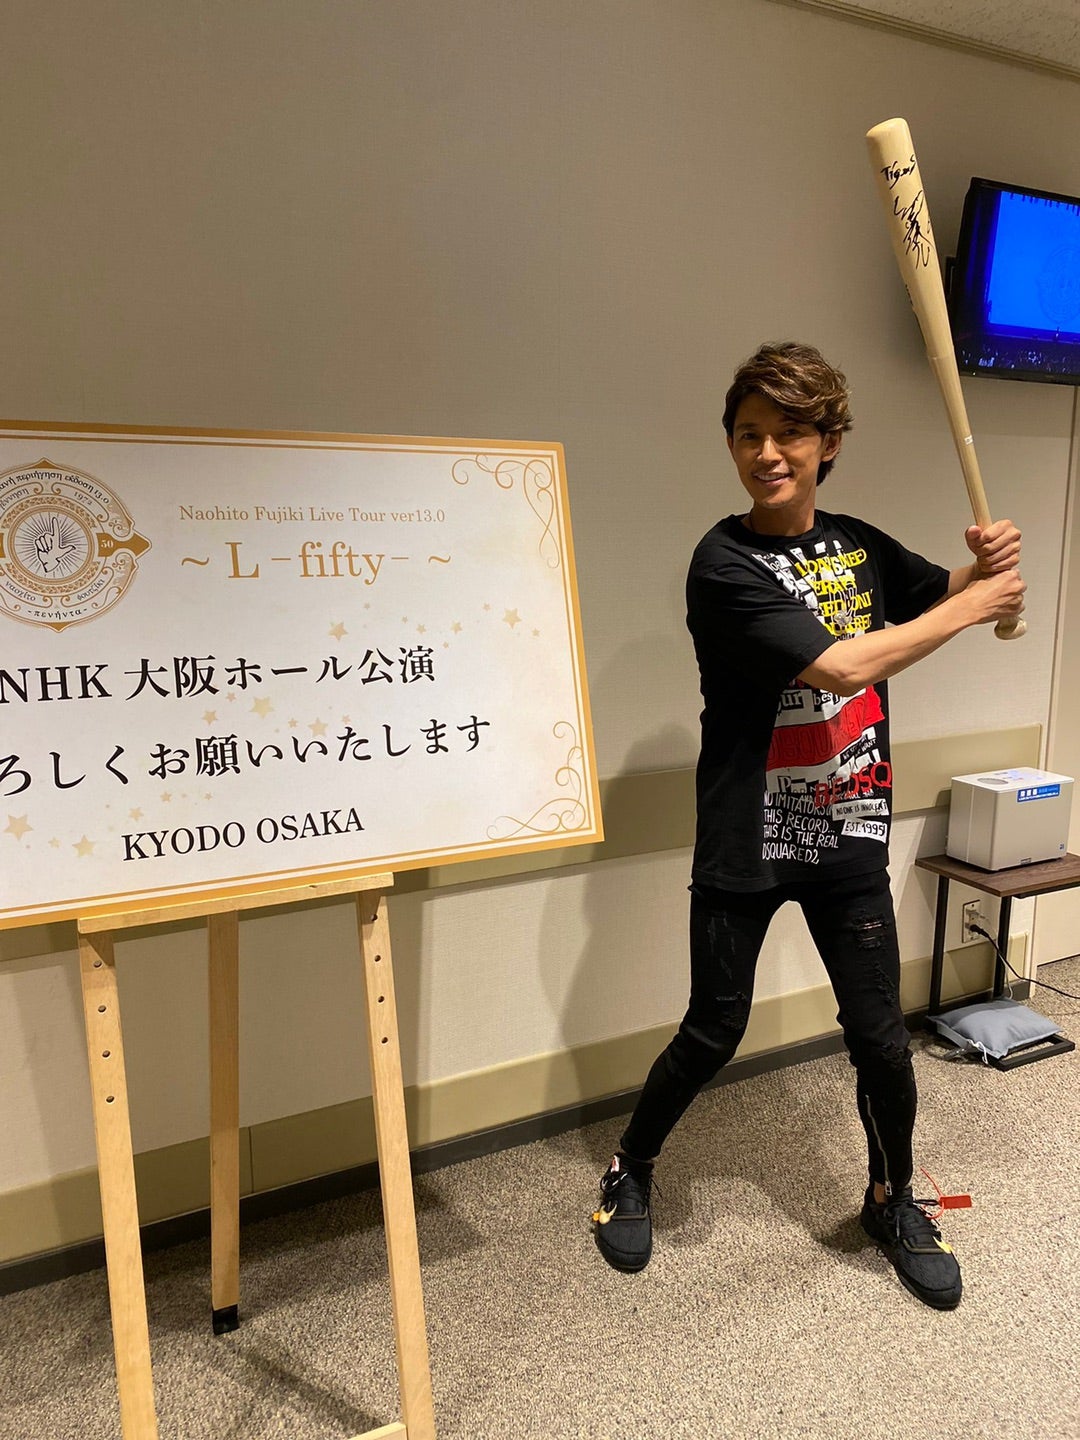 Naohito Fujiki Live Tour ver13.0 L-fifty ネタバレです！ 理系男はシュークリームの夢をみるか